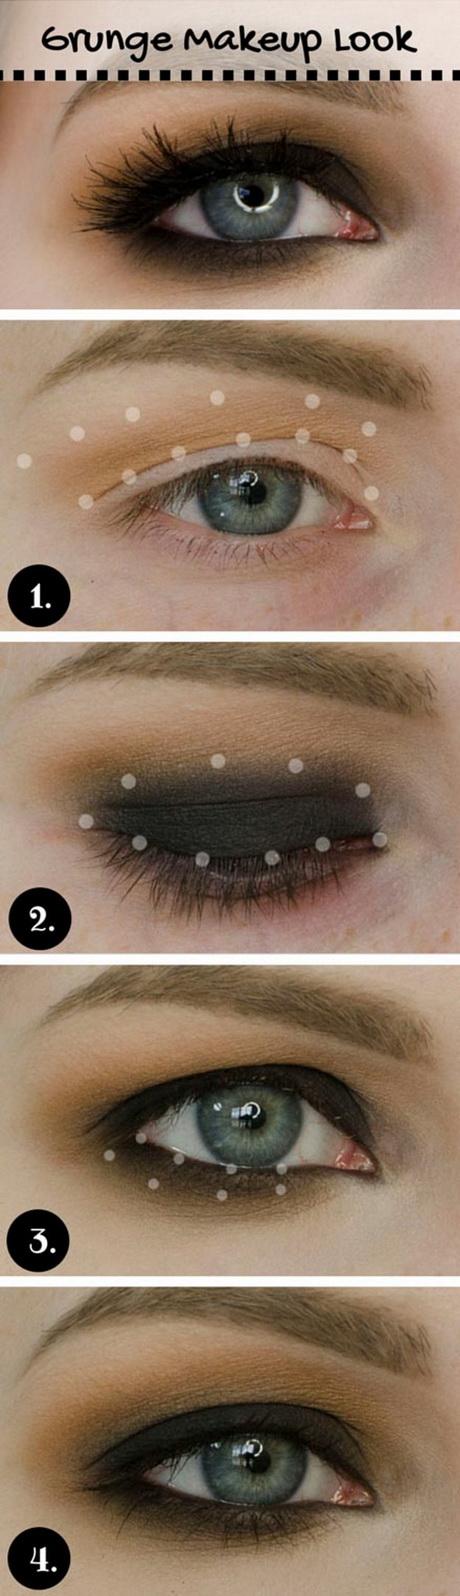 makeup-tutorial-for-blue-eyes-and-black-hair-13_11 Make-up les voor blauwe ogen en zwart haar